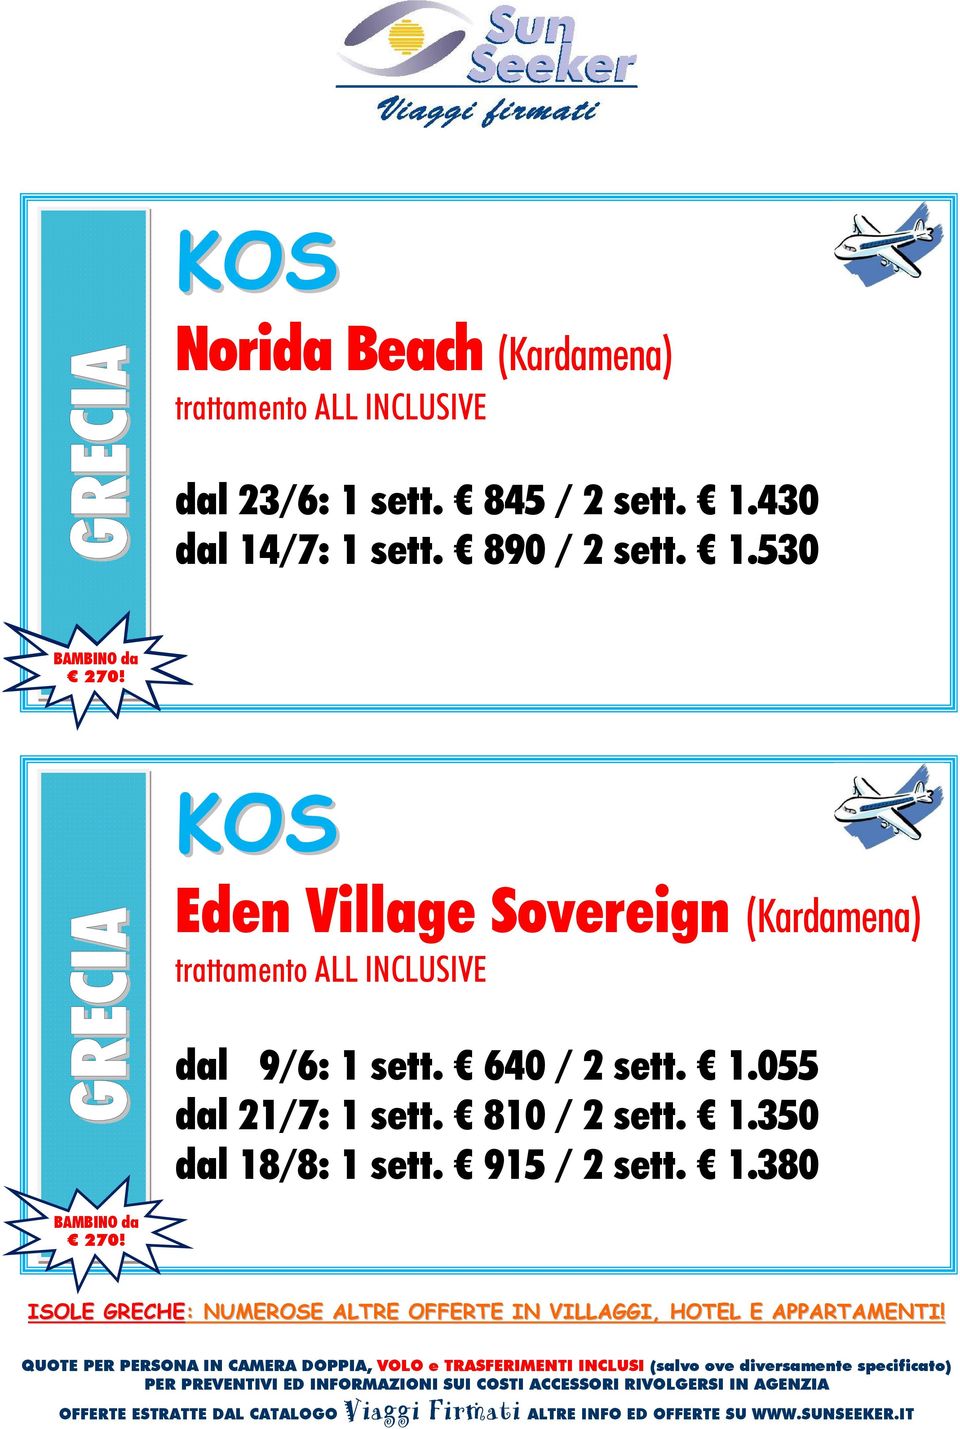 KOS GRECIA Eden Village Sovereign (Kardamena) dal 9/6: 1 sett. 640 / 2 sett. 1.055 dal 21/7: 1 sett.